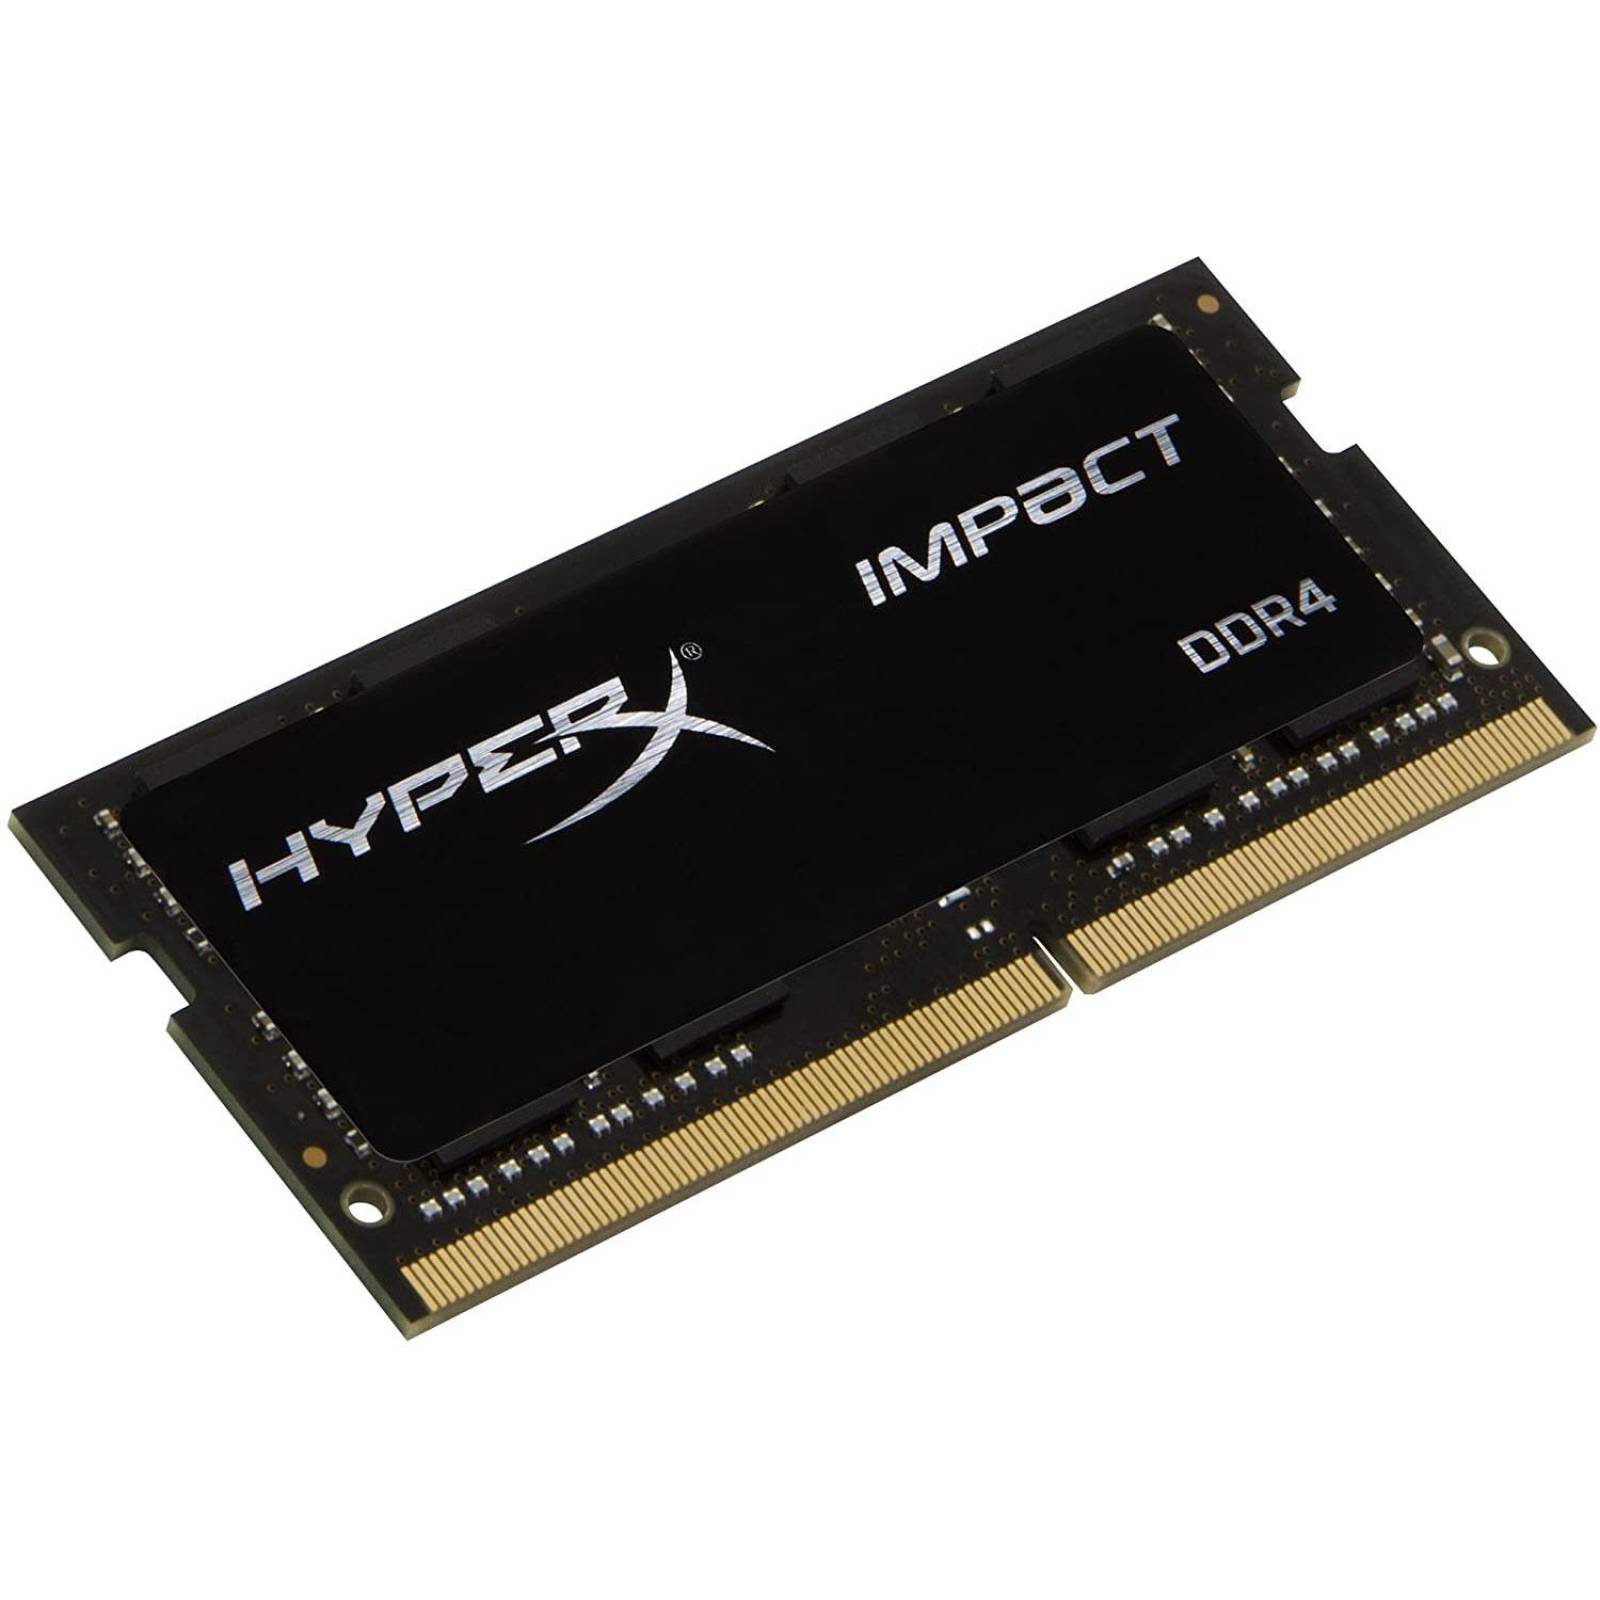 Memoria RAM DDR4 16GB 2666MHz KINGSTON HYPERX IMPACT Laptop HX426S15IB2/16 